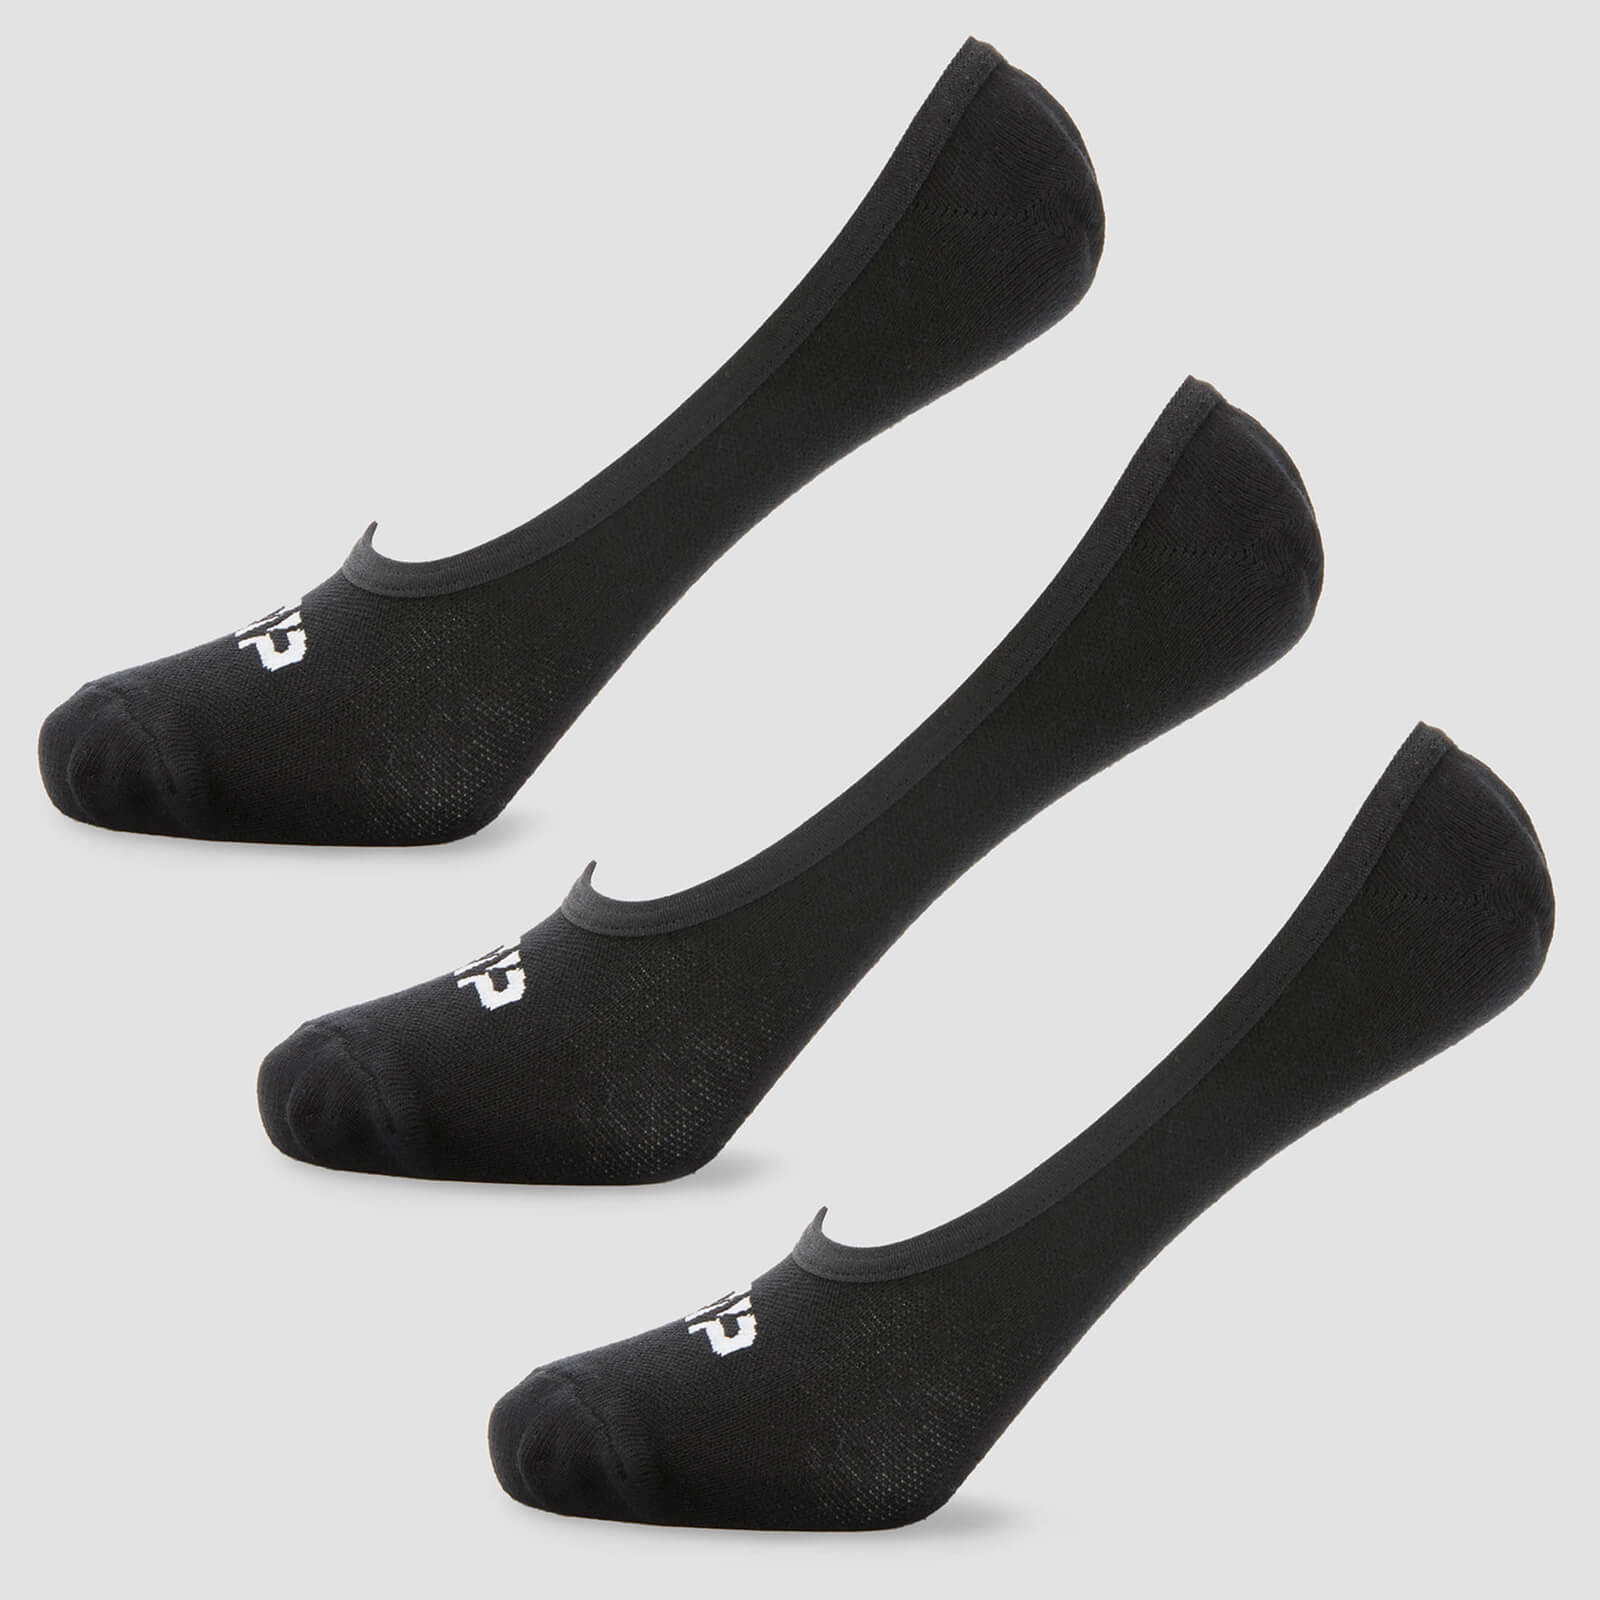 Muške nevidljive čarape - Crne (3 para) - UK 6-8